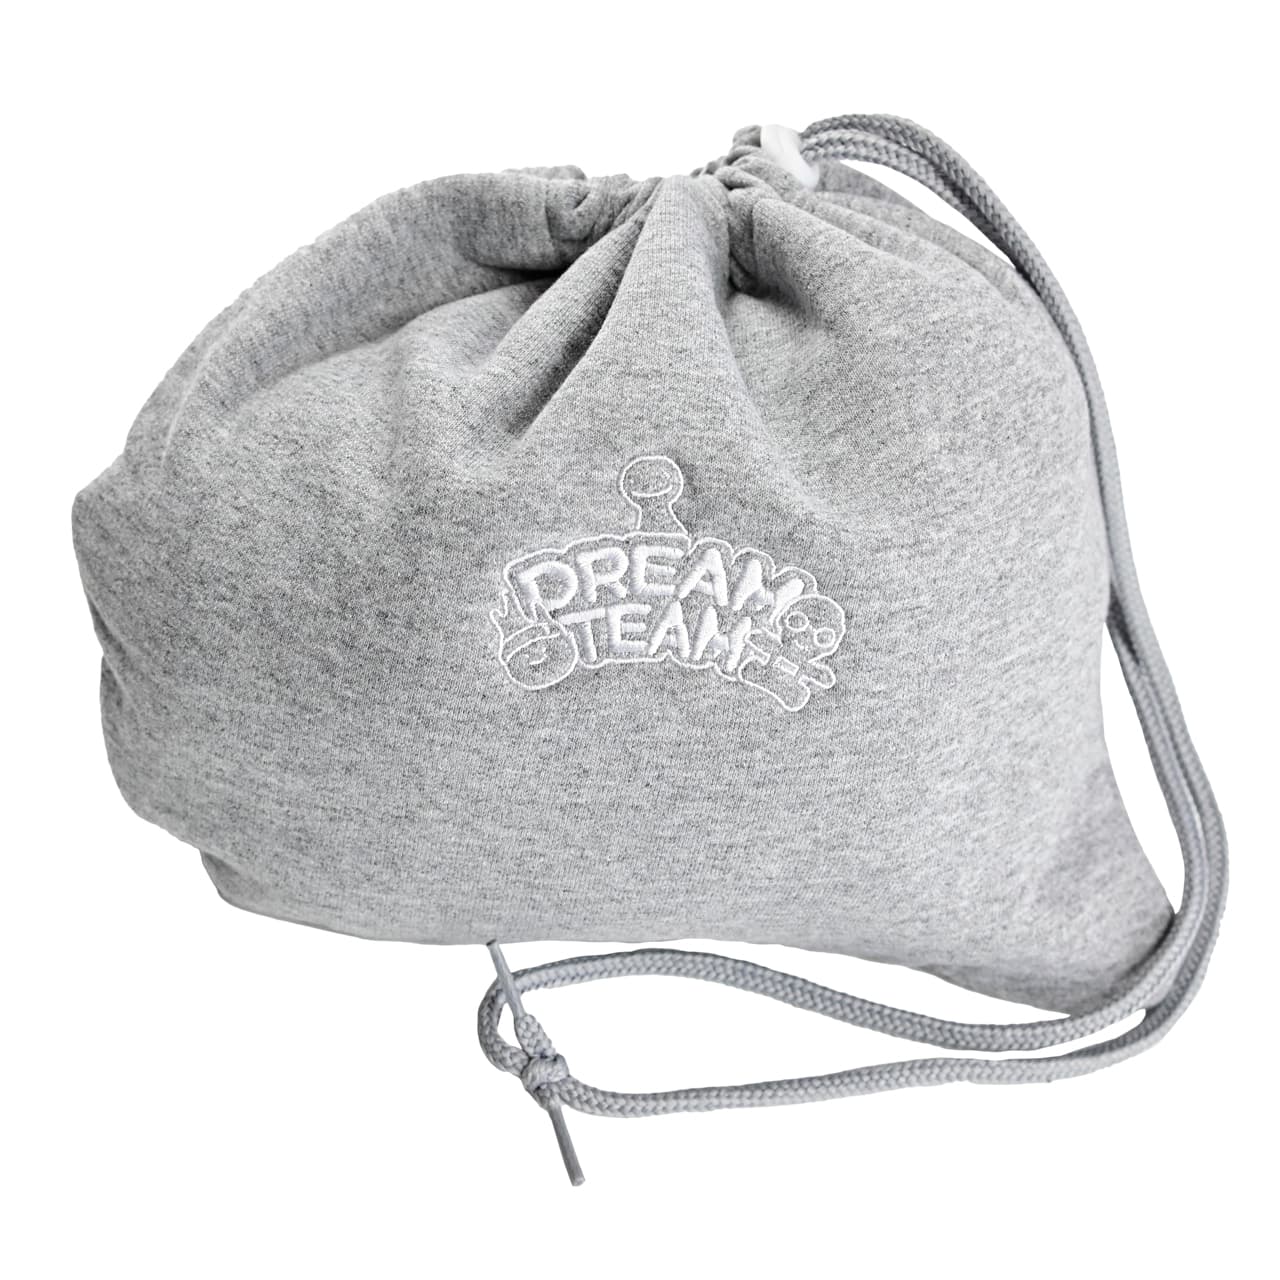 Dream Team Embroidered Hoodie Bag